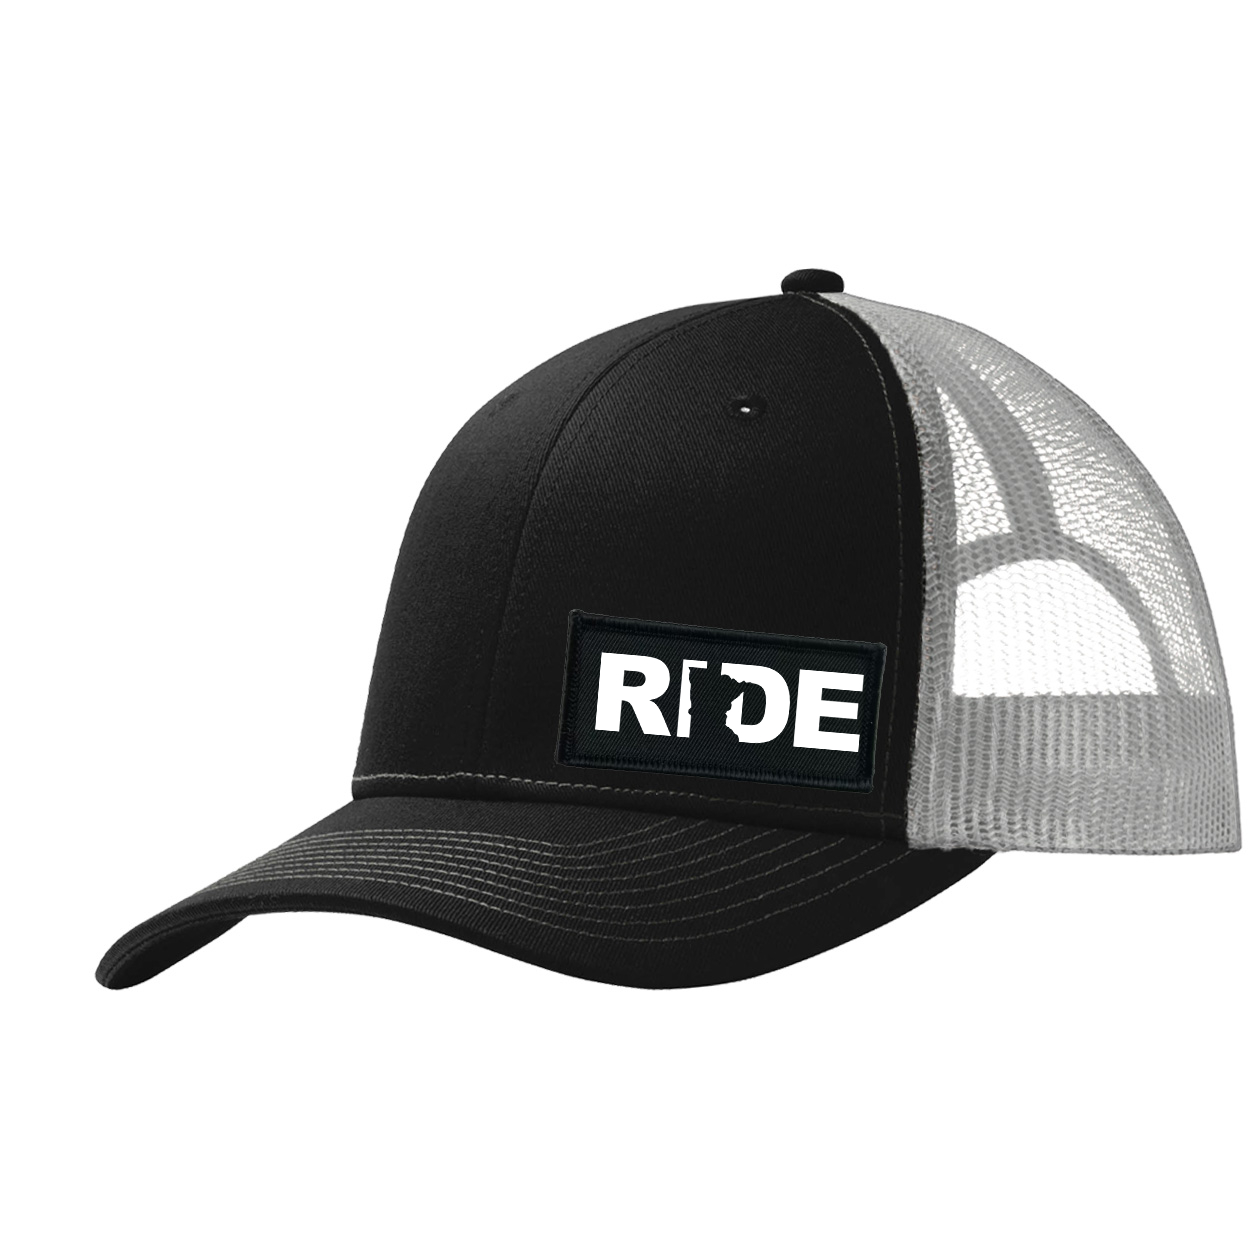 Ride Minnesota Night Out Woven Patch Snapback Trucker Hat Black/Gray 